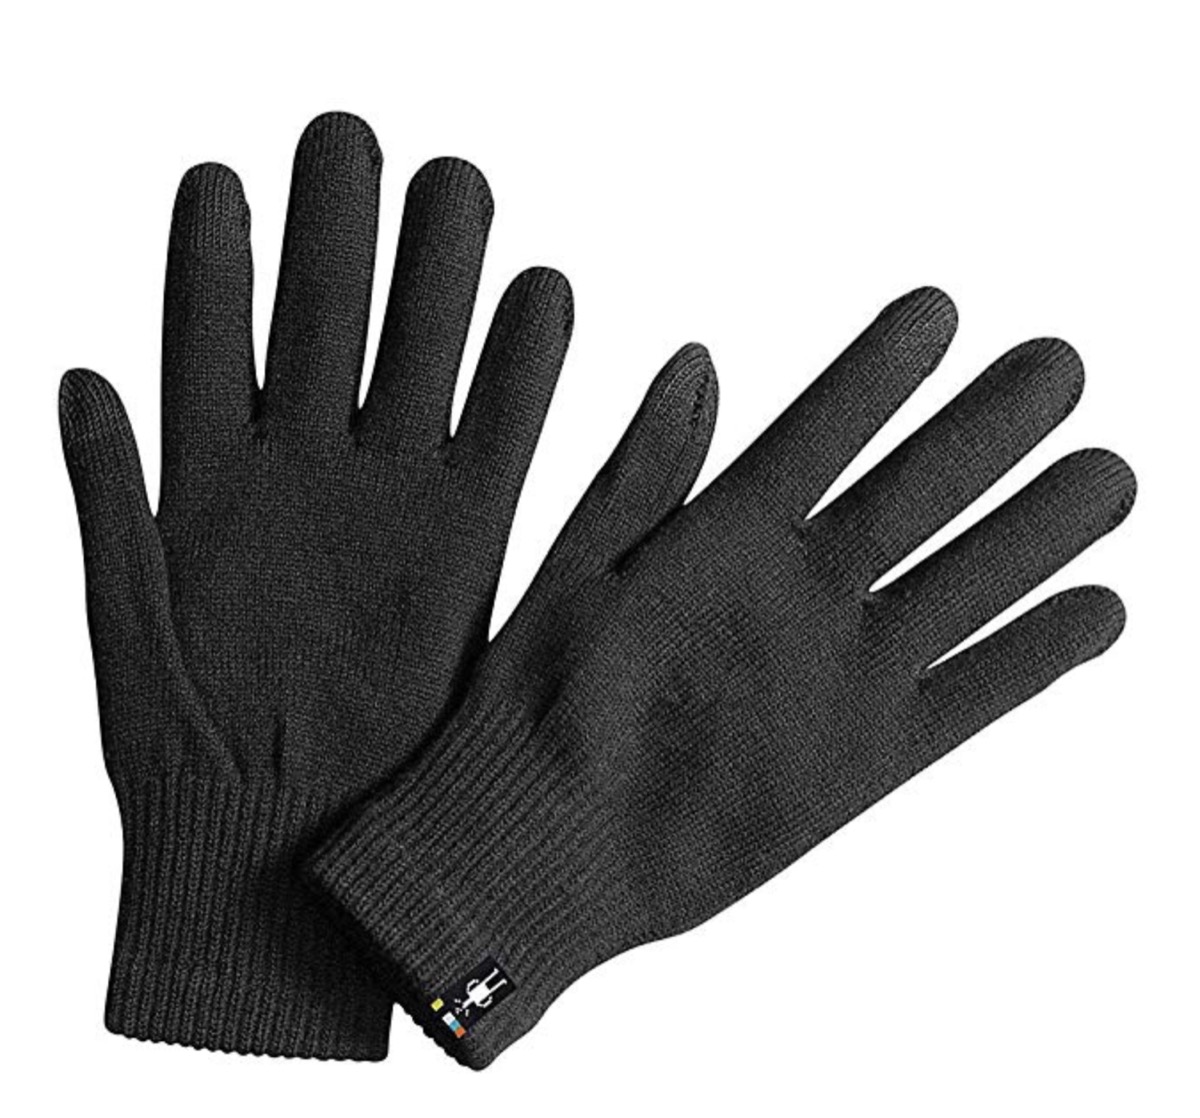 smartwool merino wool liner glove